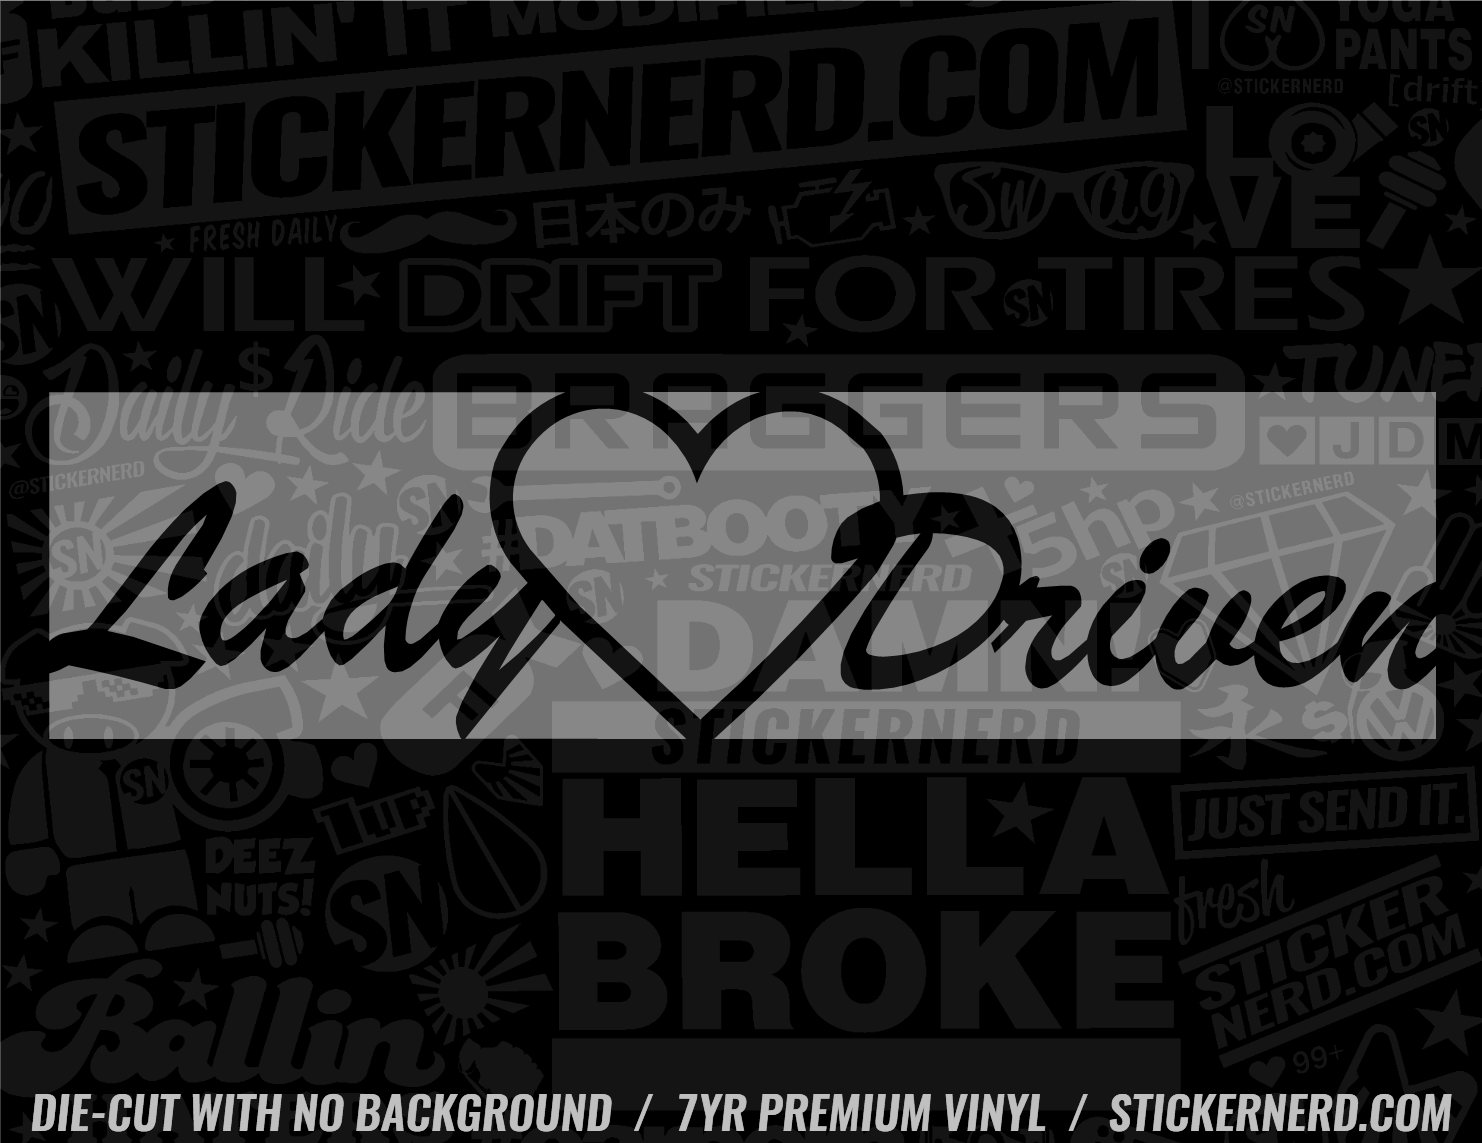 Lady Driven Sticker - Window Decal - STICKERNERD.COM